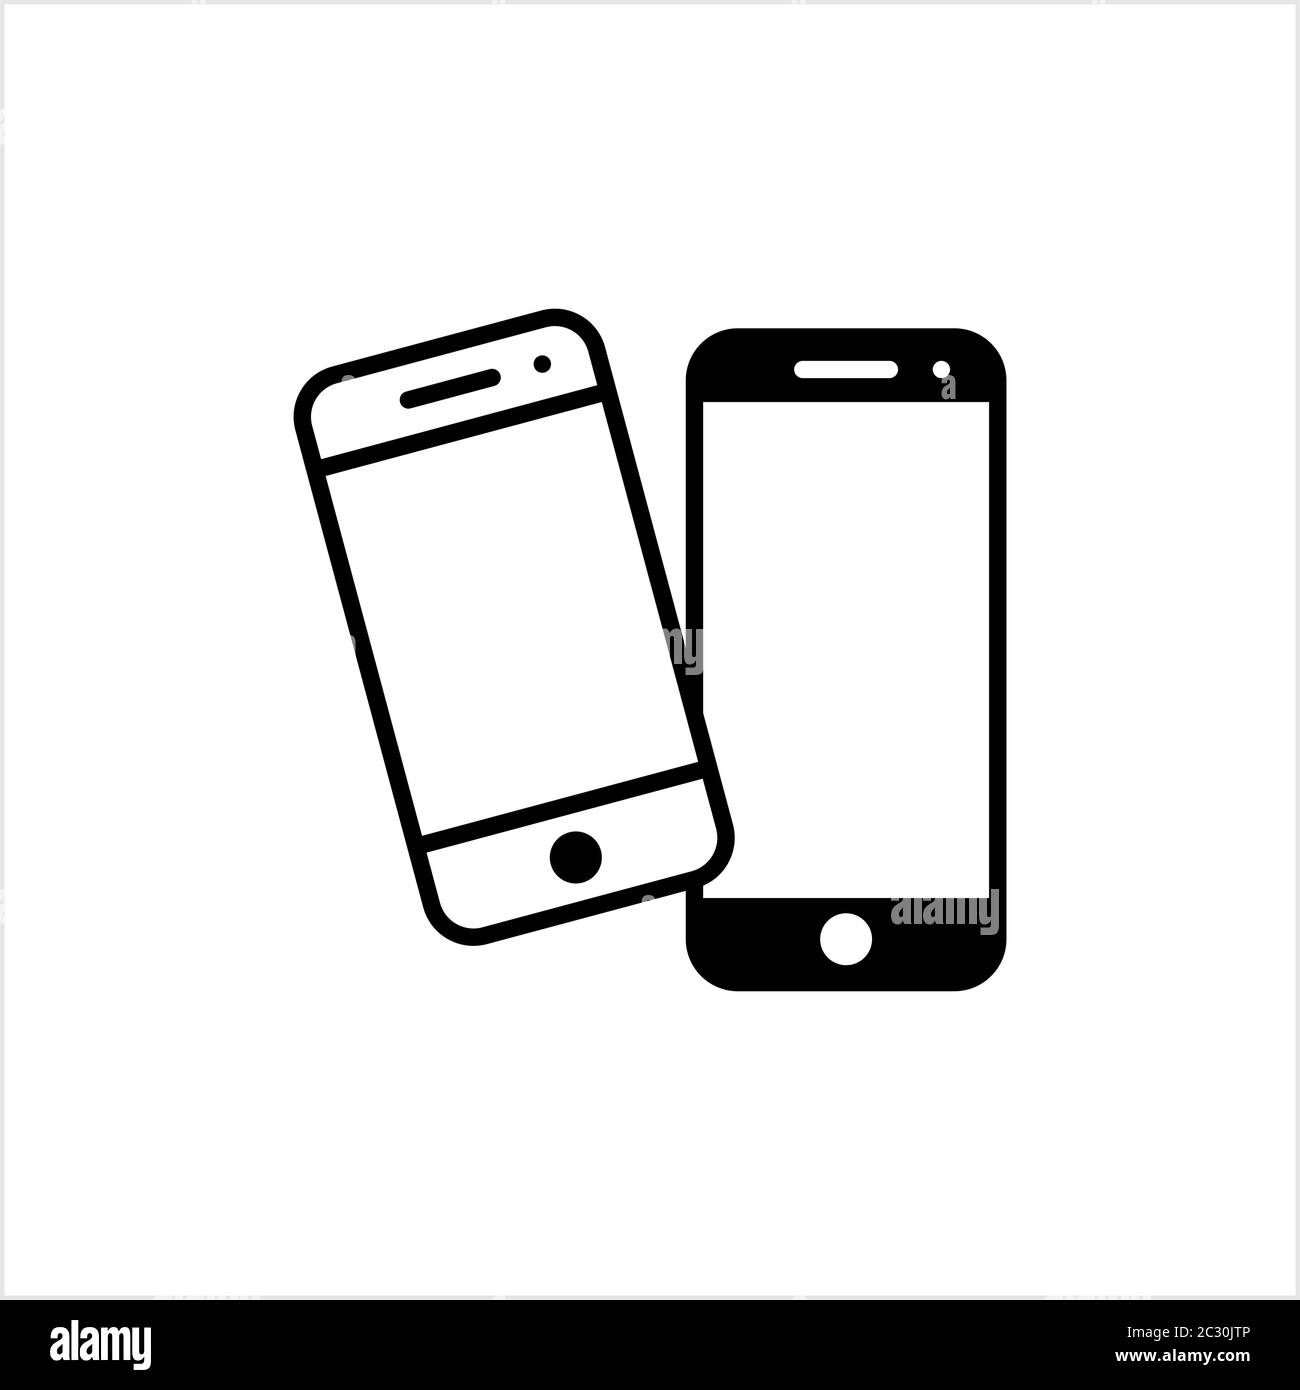 Smart Phone Icon, Smartphone Vector Art Illustration Stock Vector Image ...